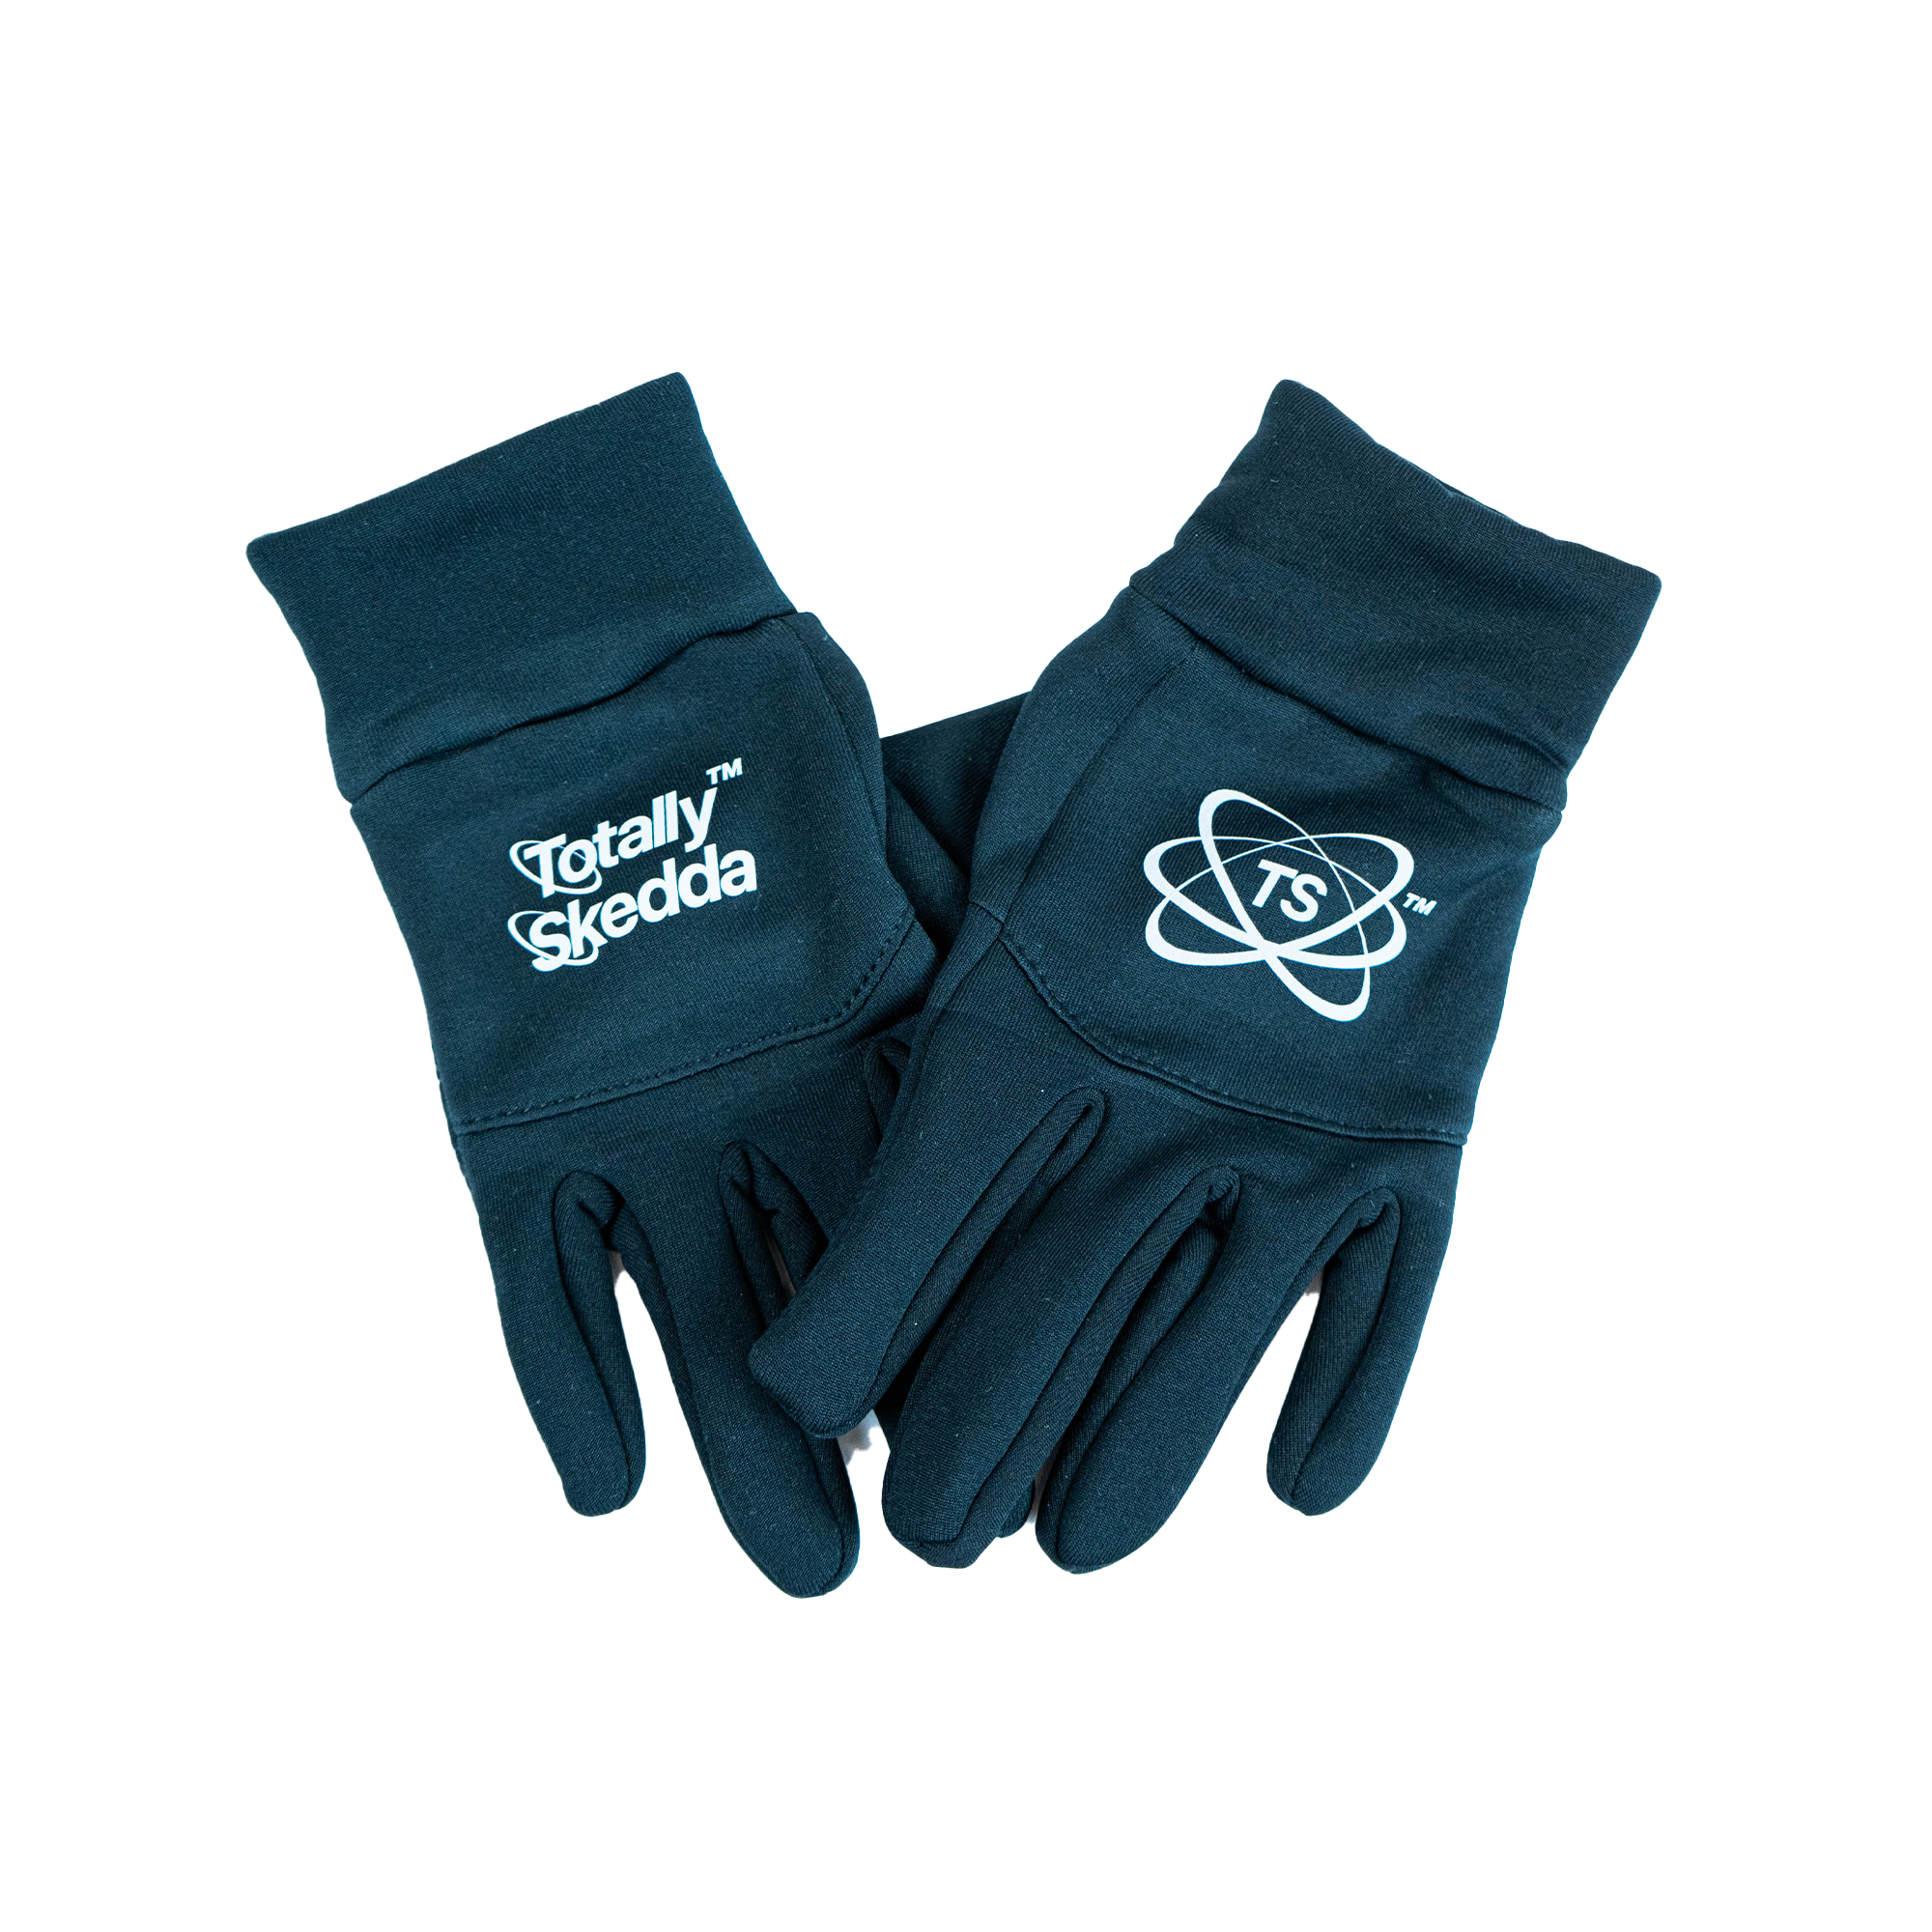 Softshell Tech Gloves